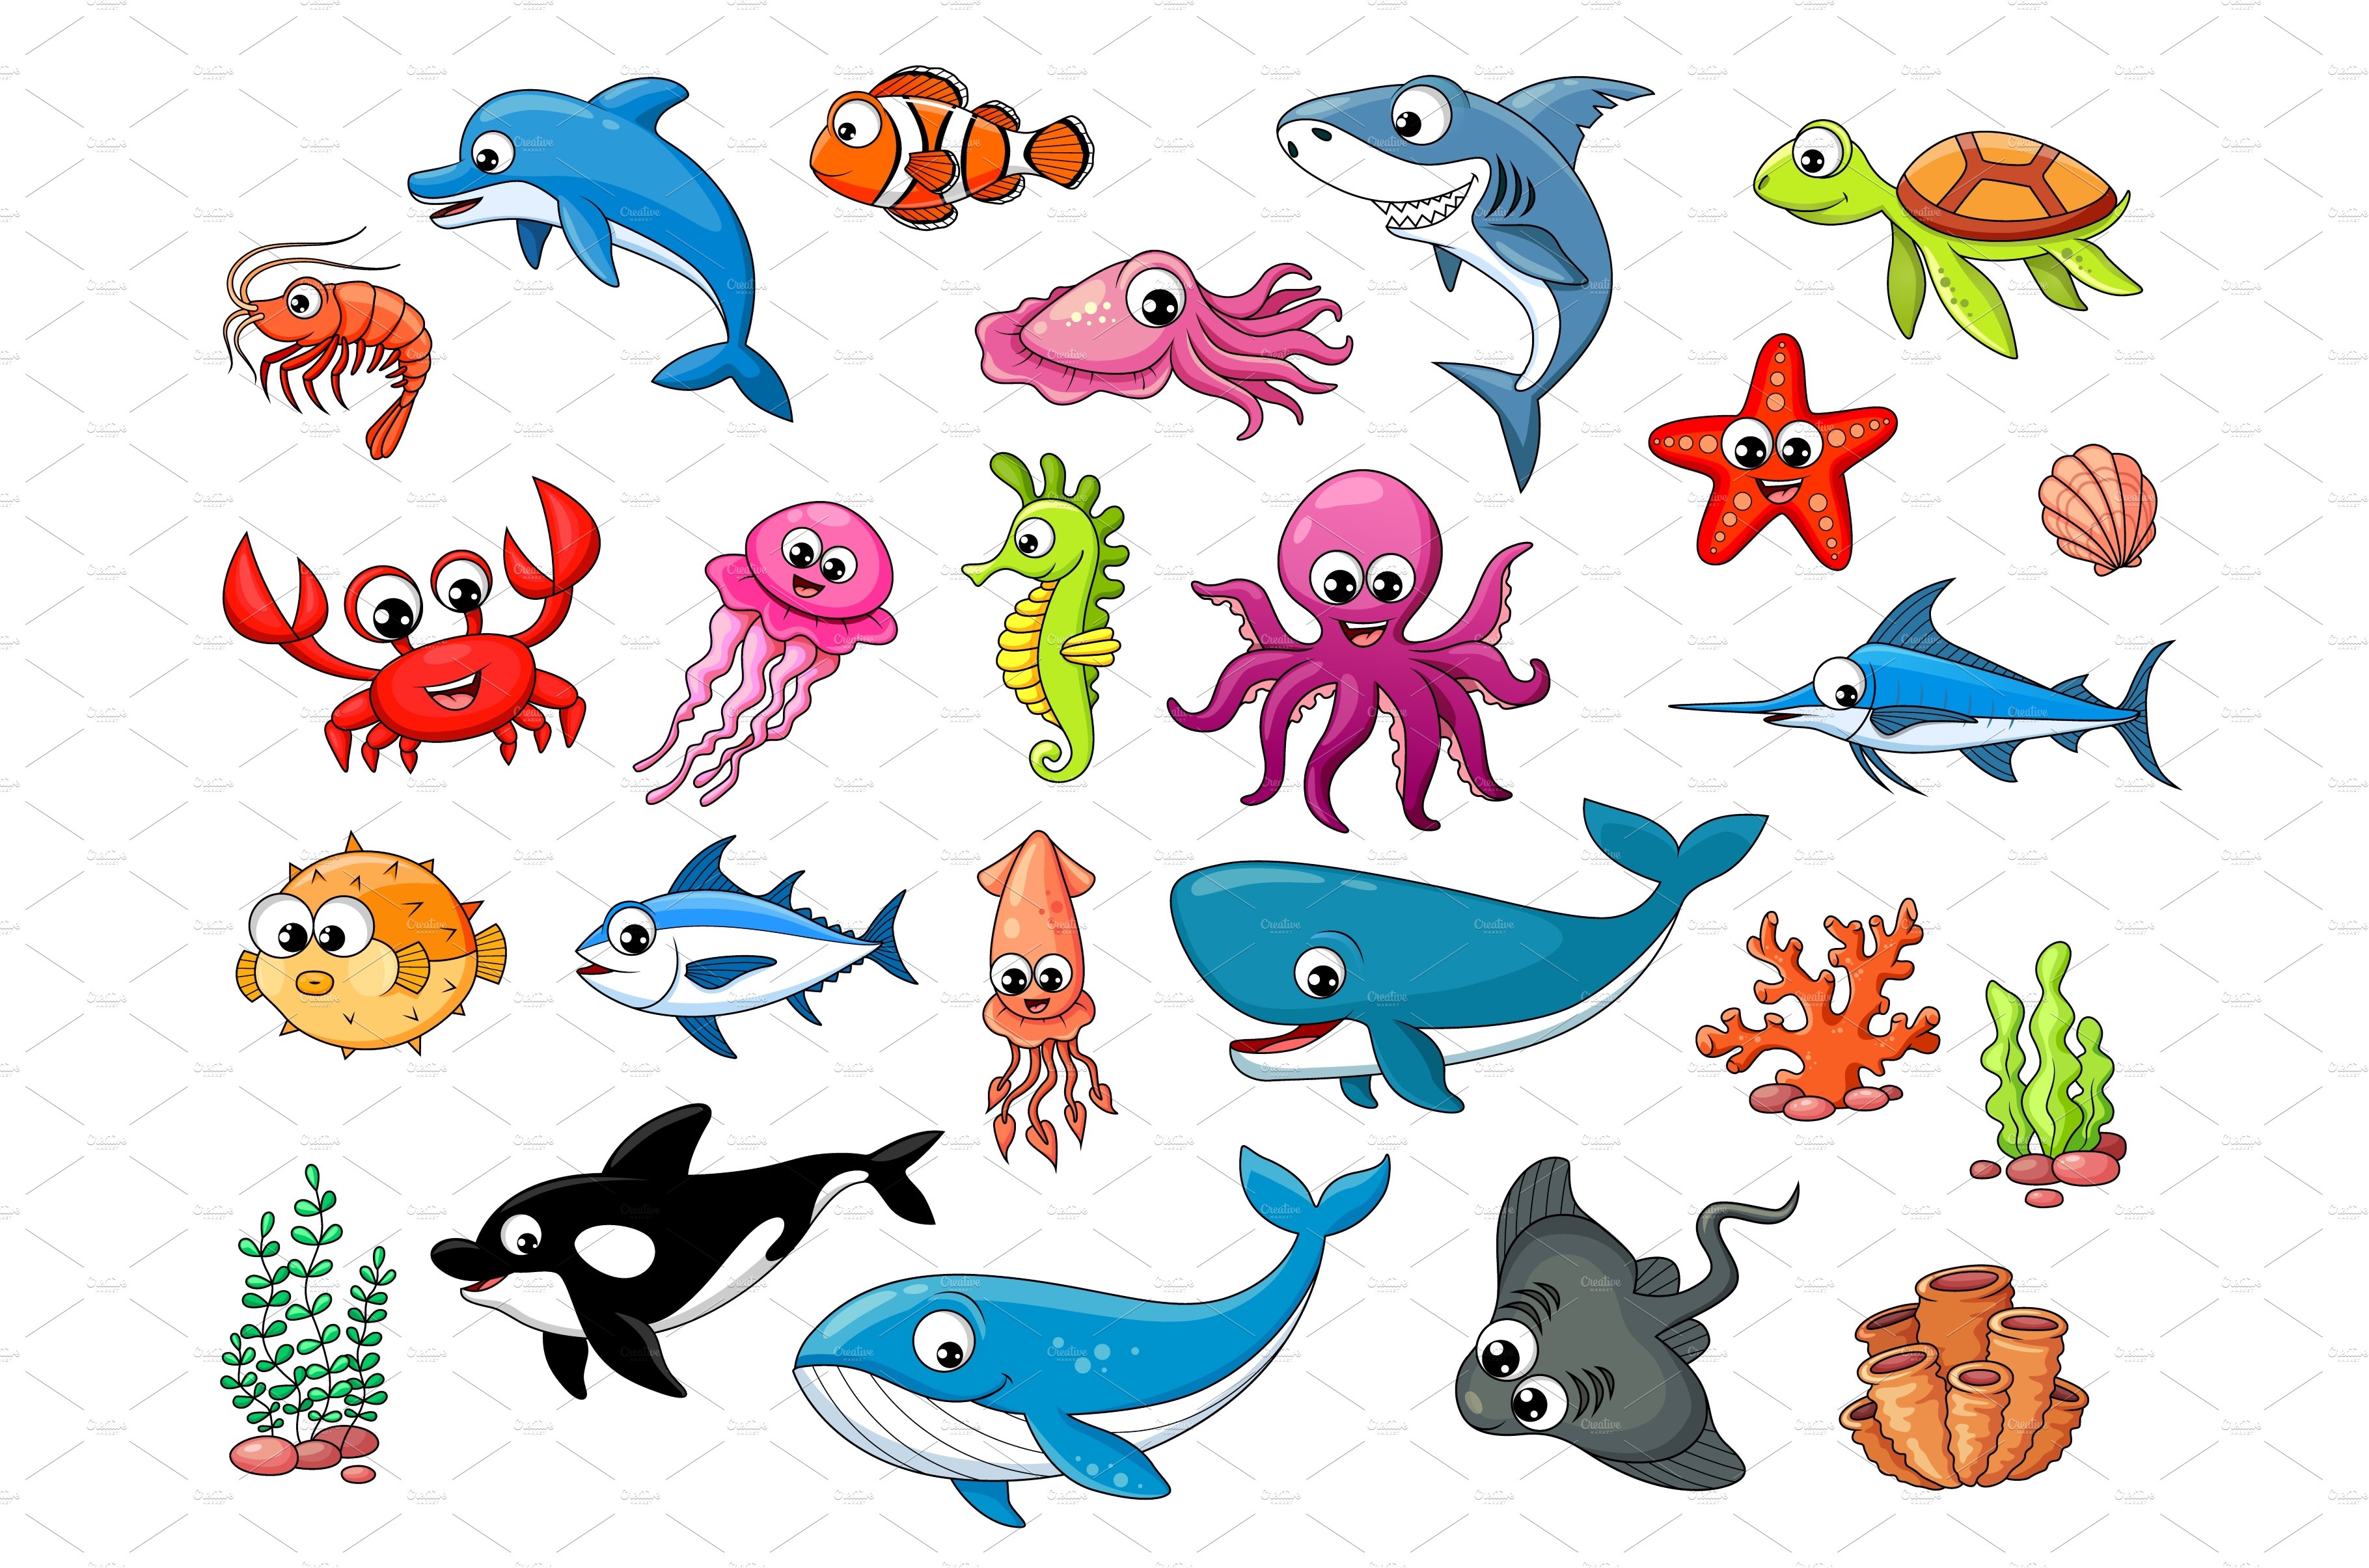 Cartoon underwater animals cover image.